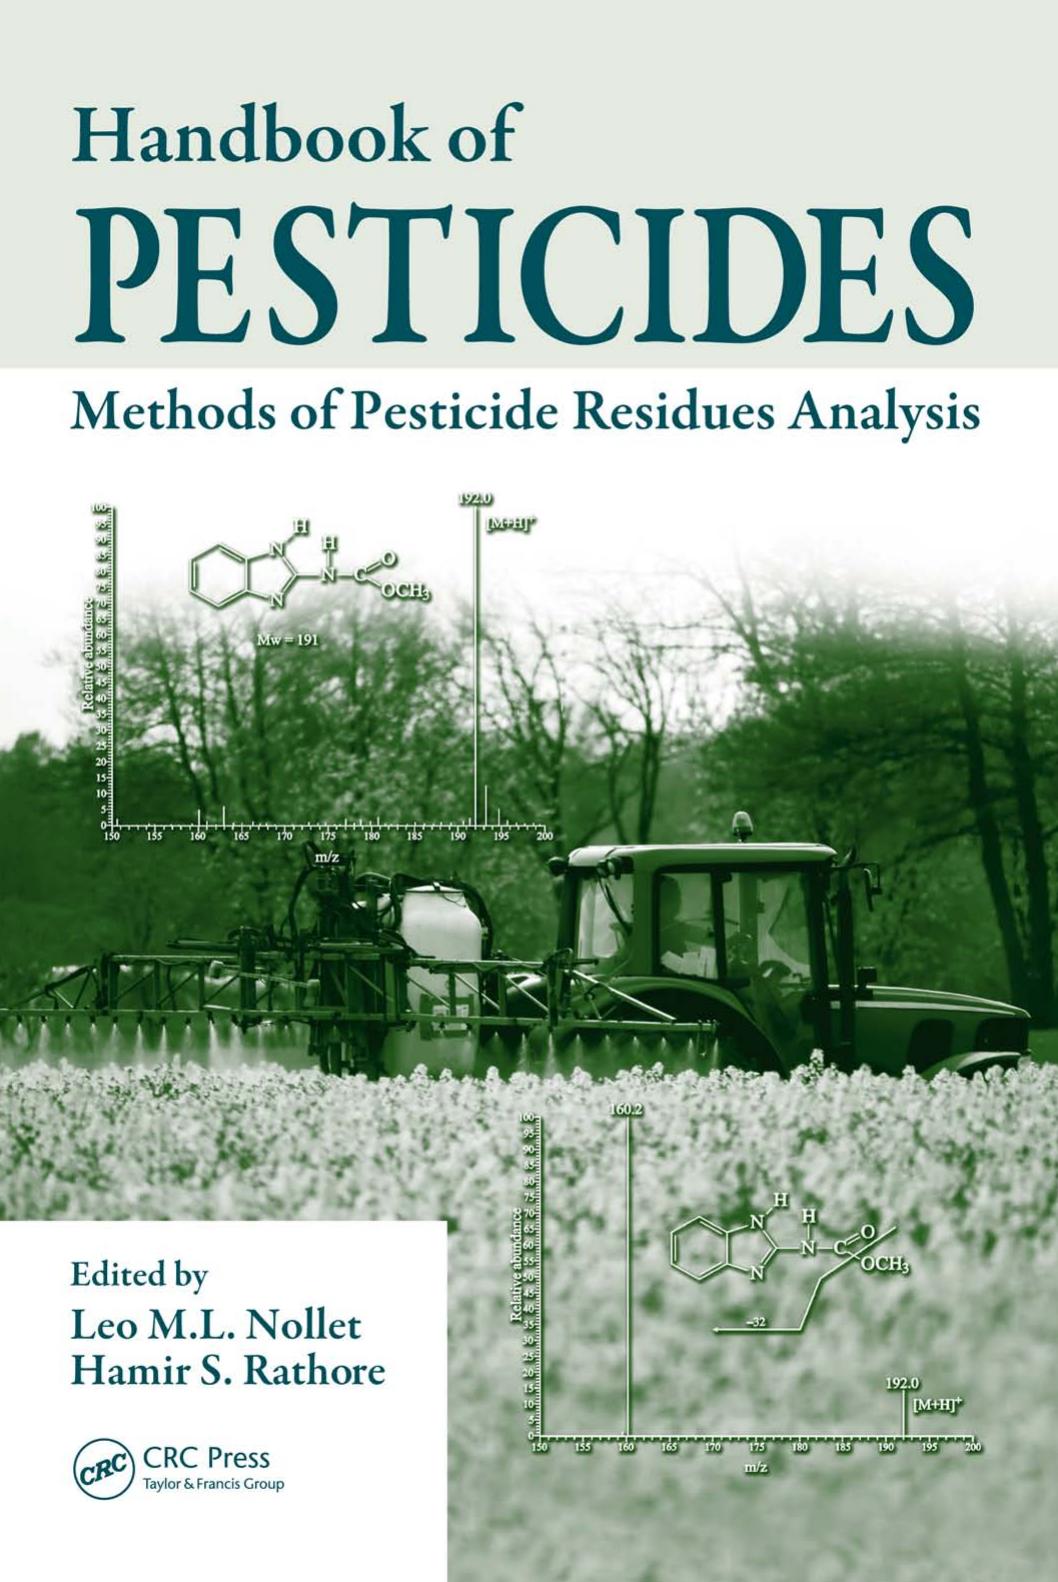 Handbook of PESTICIDES Methods of Pesticide Residues Analysis